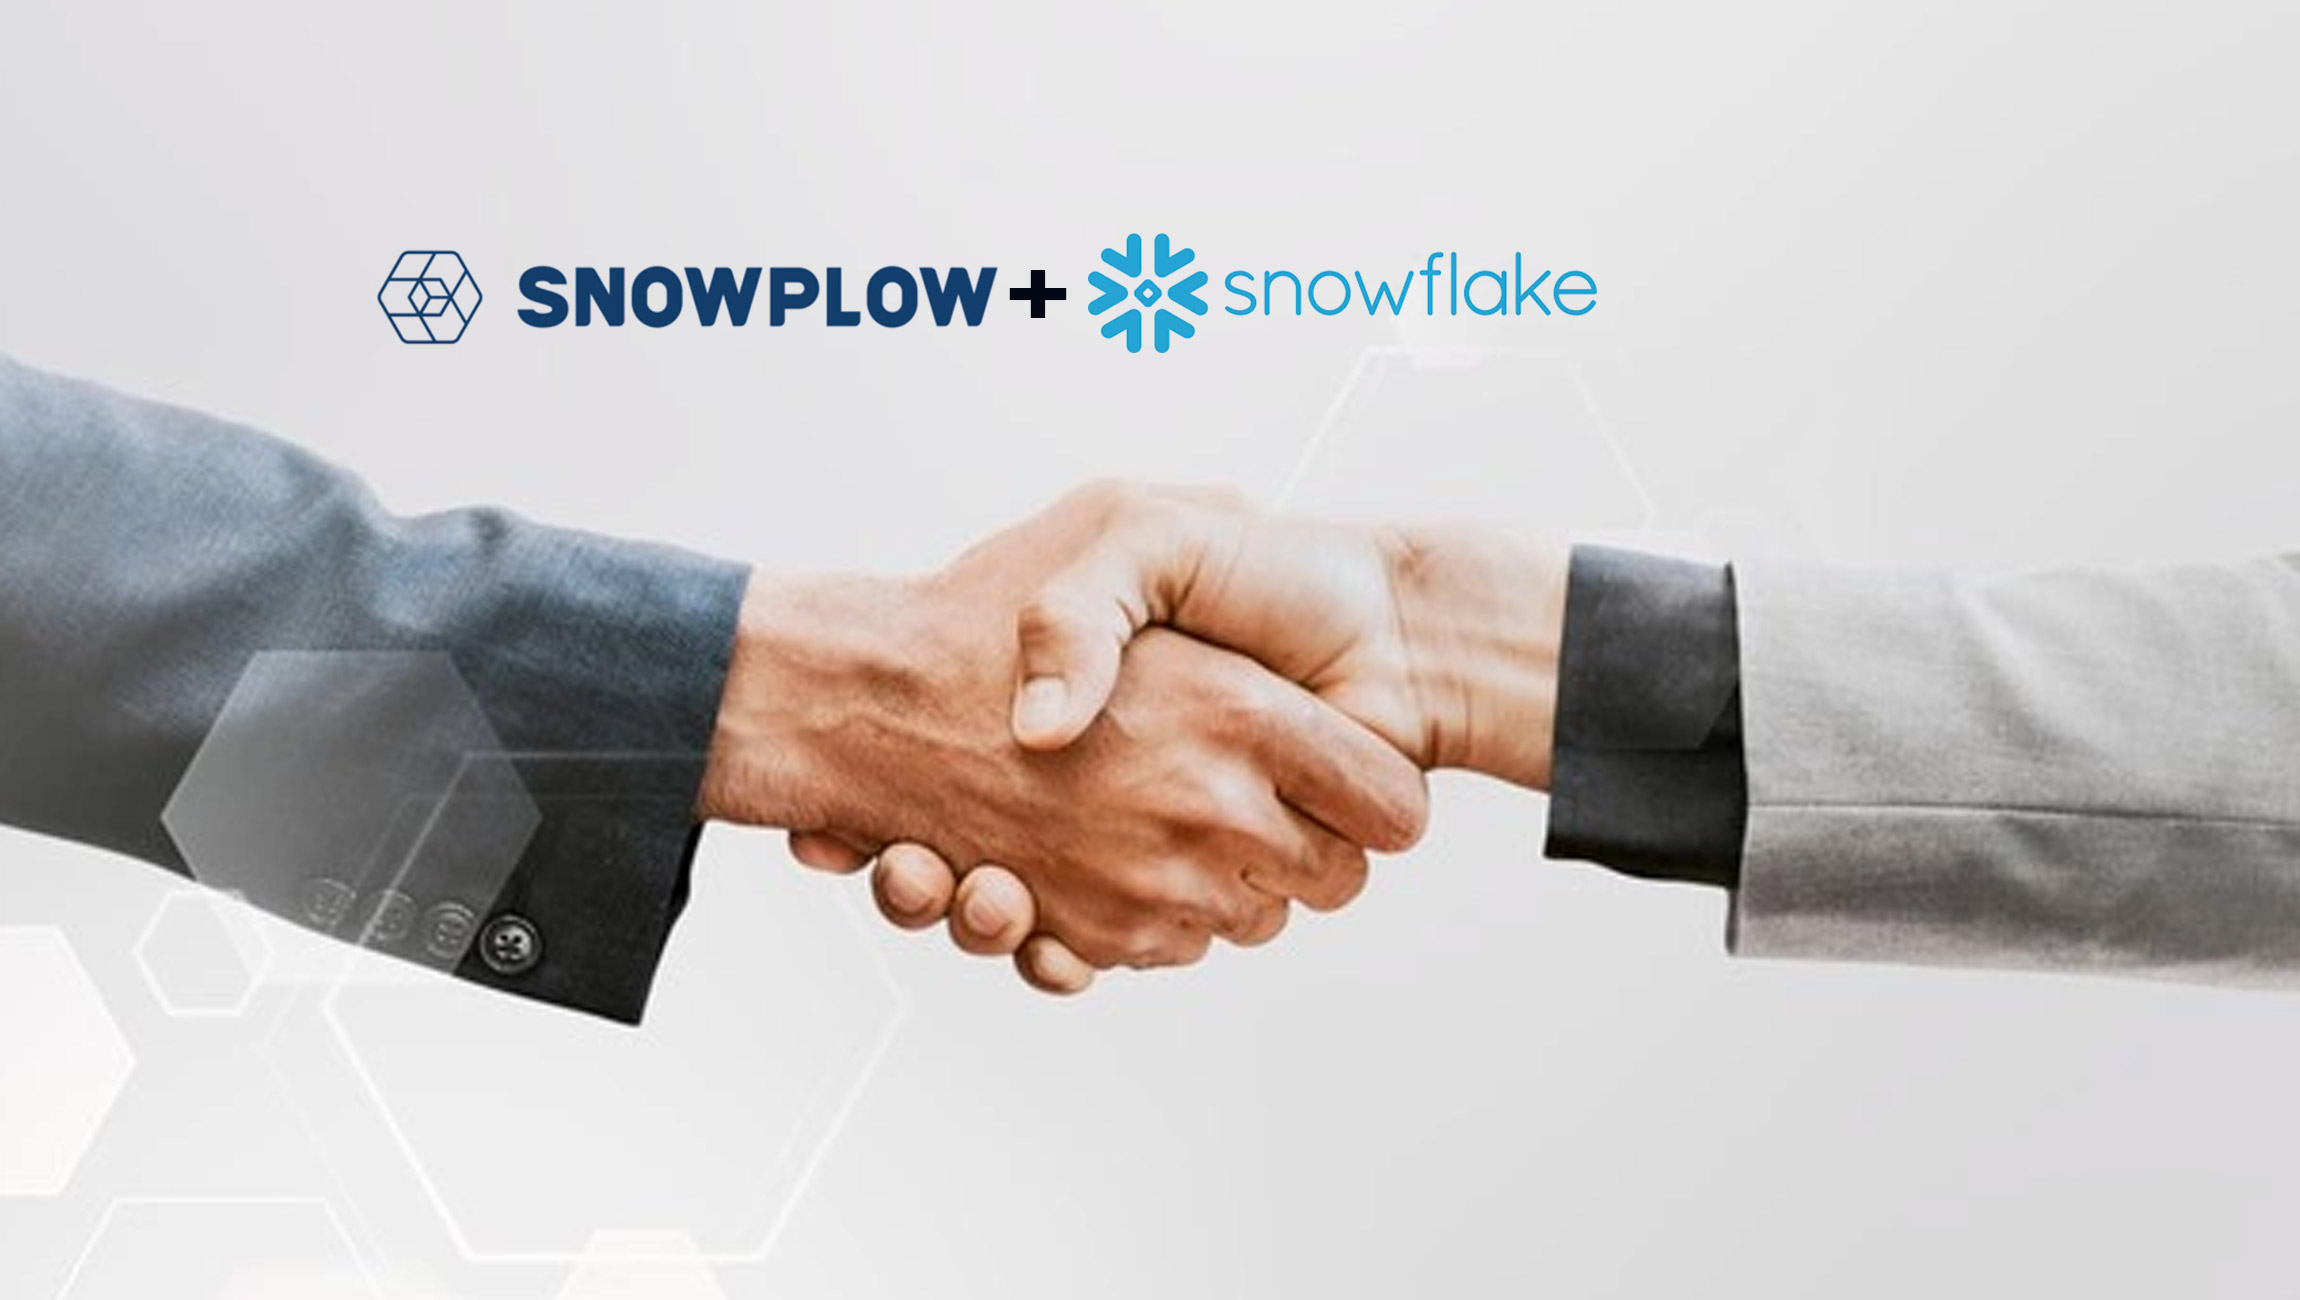 Snowplow-achieves-Premier-Tier-Partner-status-with-Snowflake